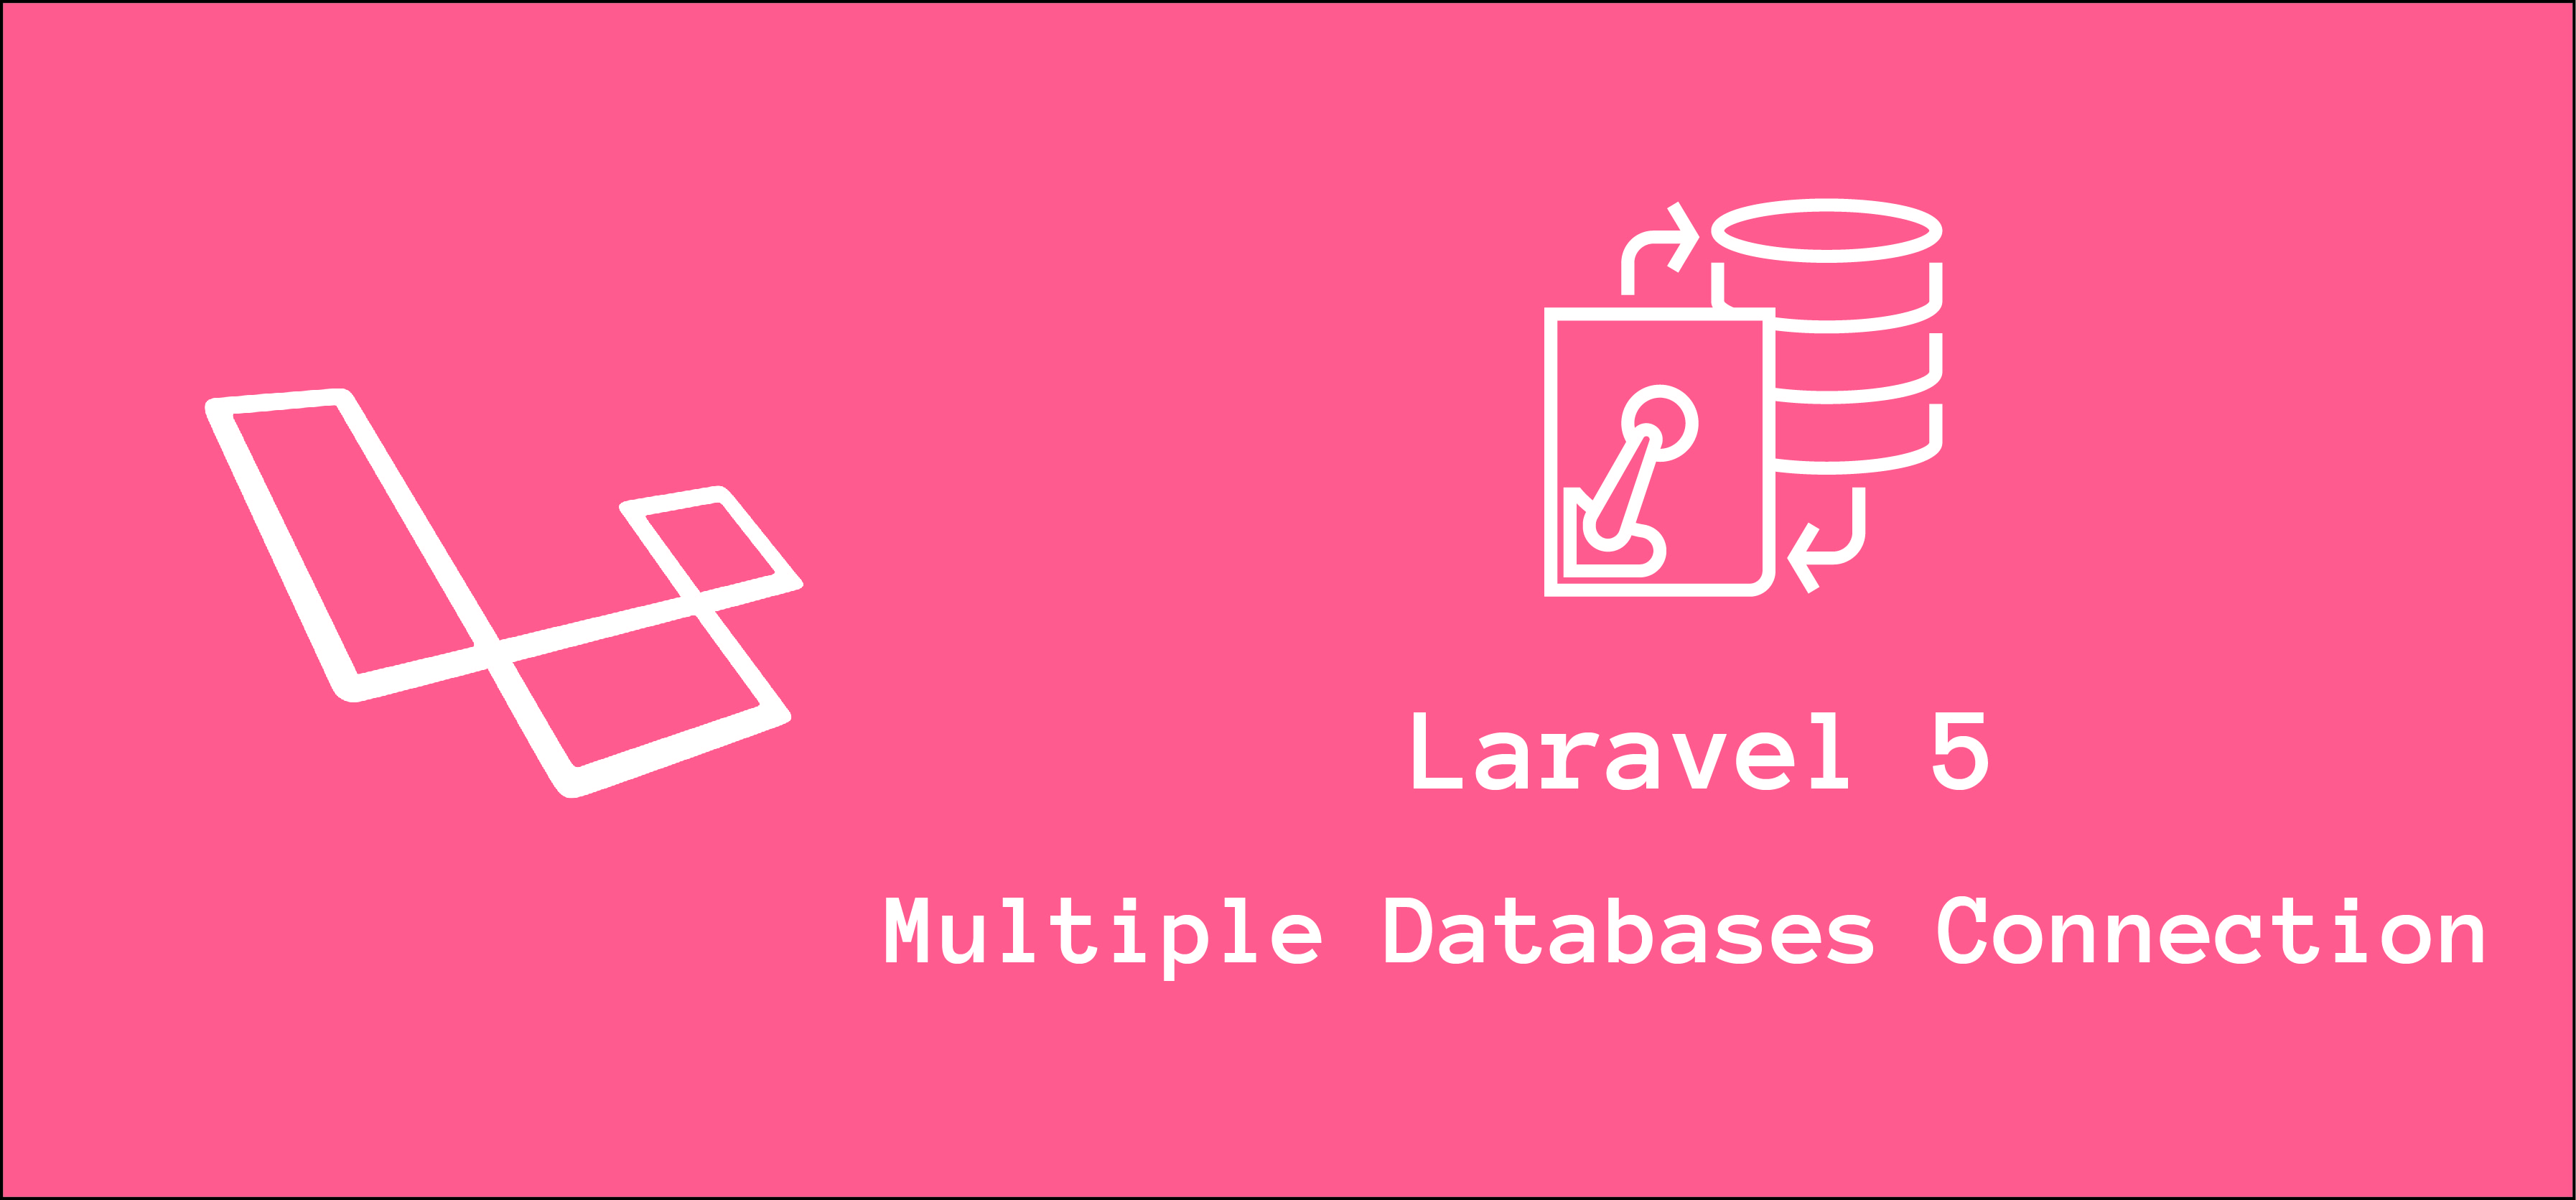 Laravel Database Connection and Configuration